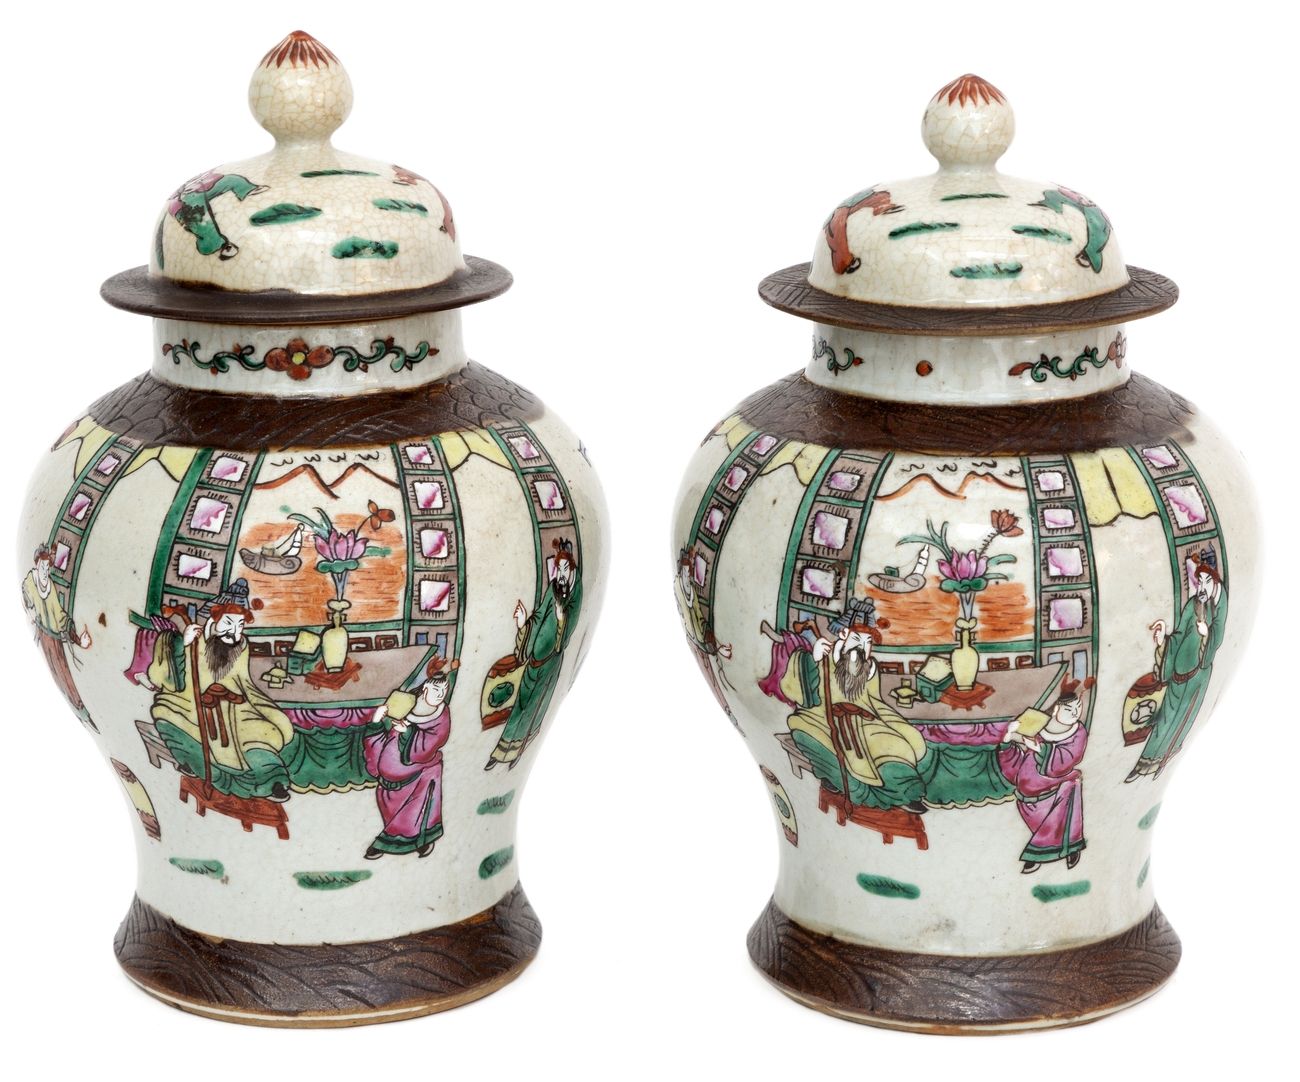 Null China, siglo XIX
Un par de jarrones cubiertos de porcelana craquelada de Na&hellip;